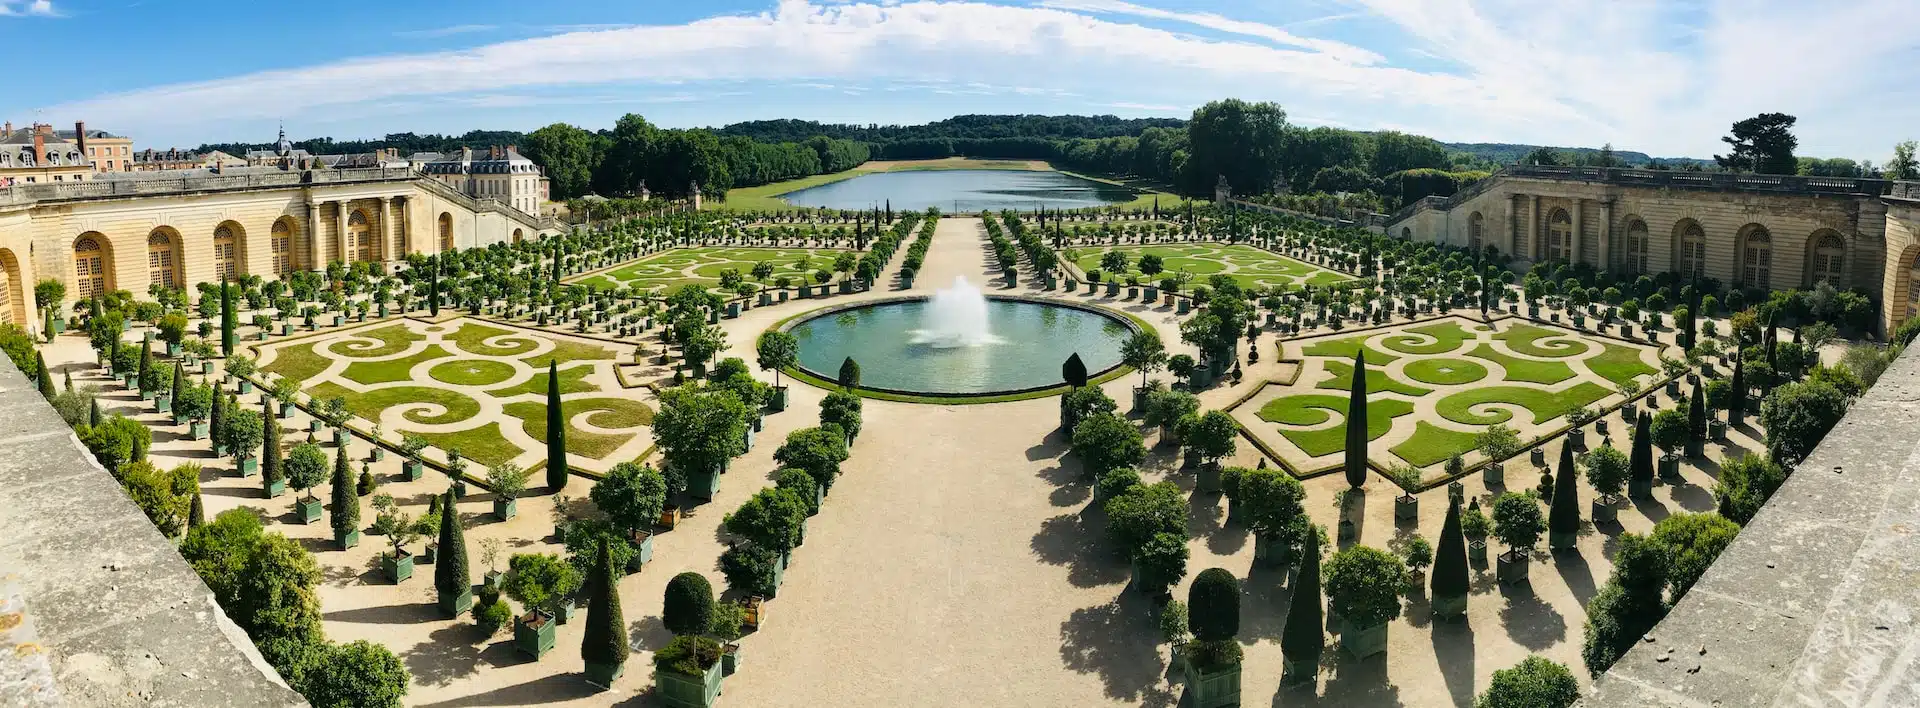 Versailles Image